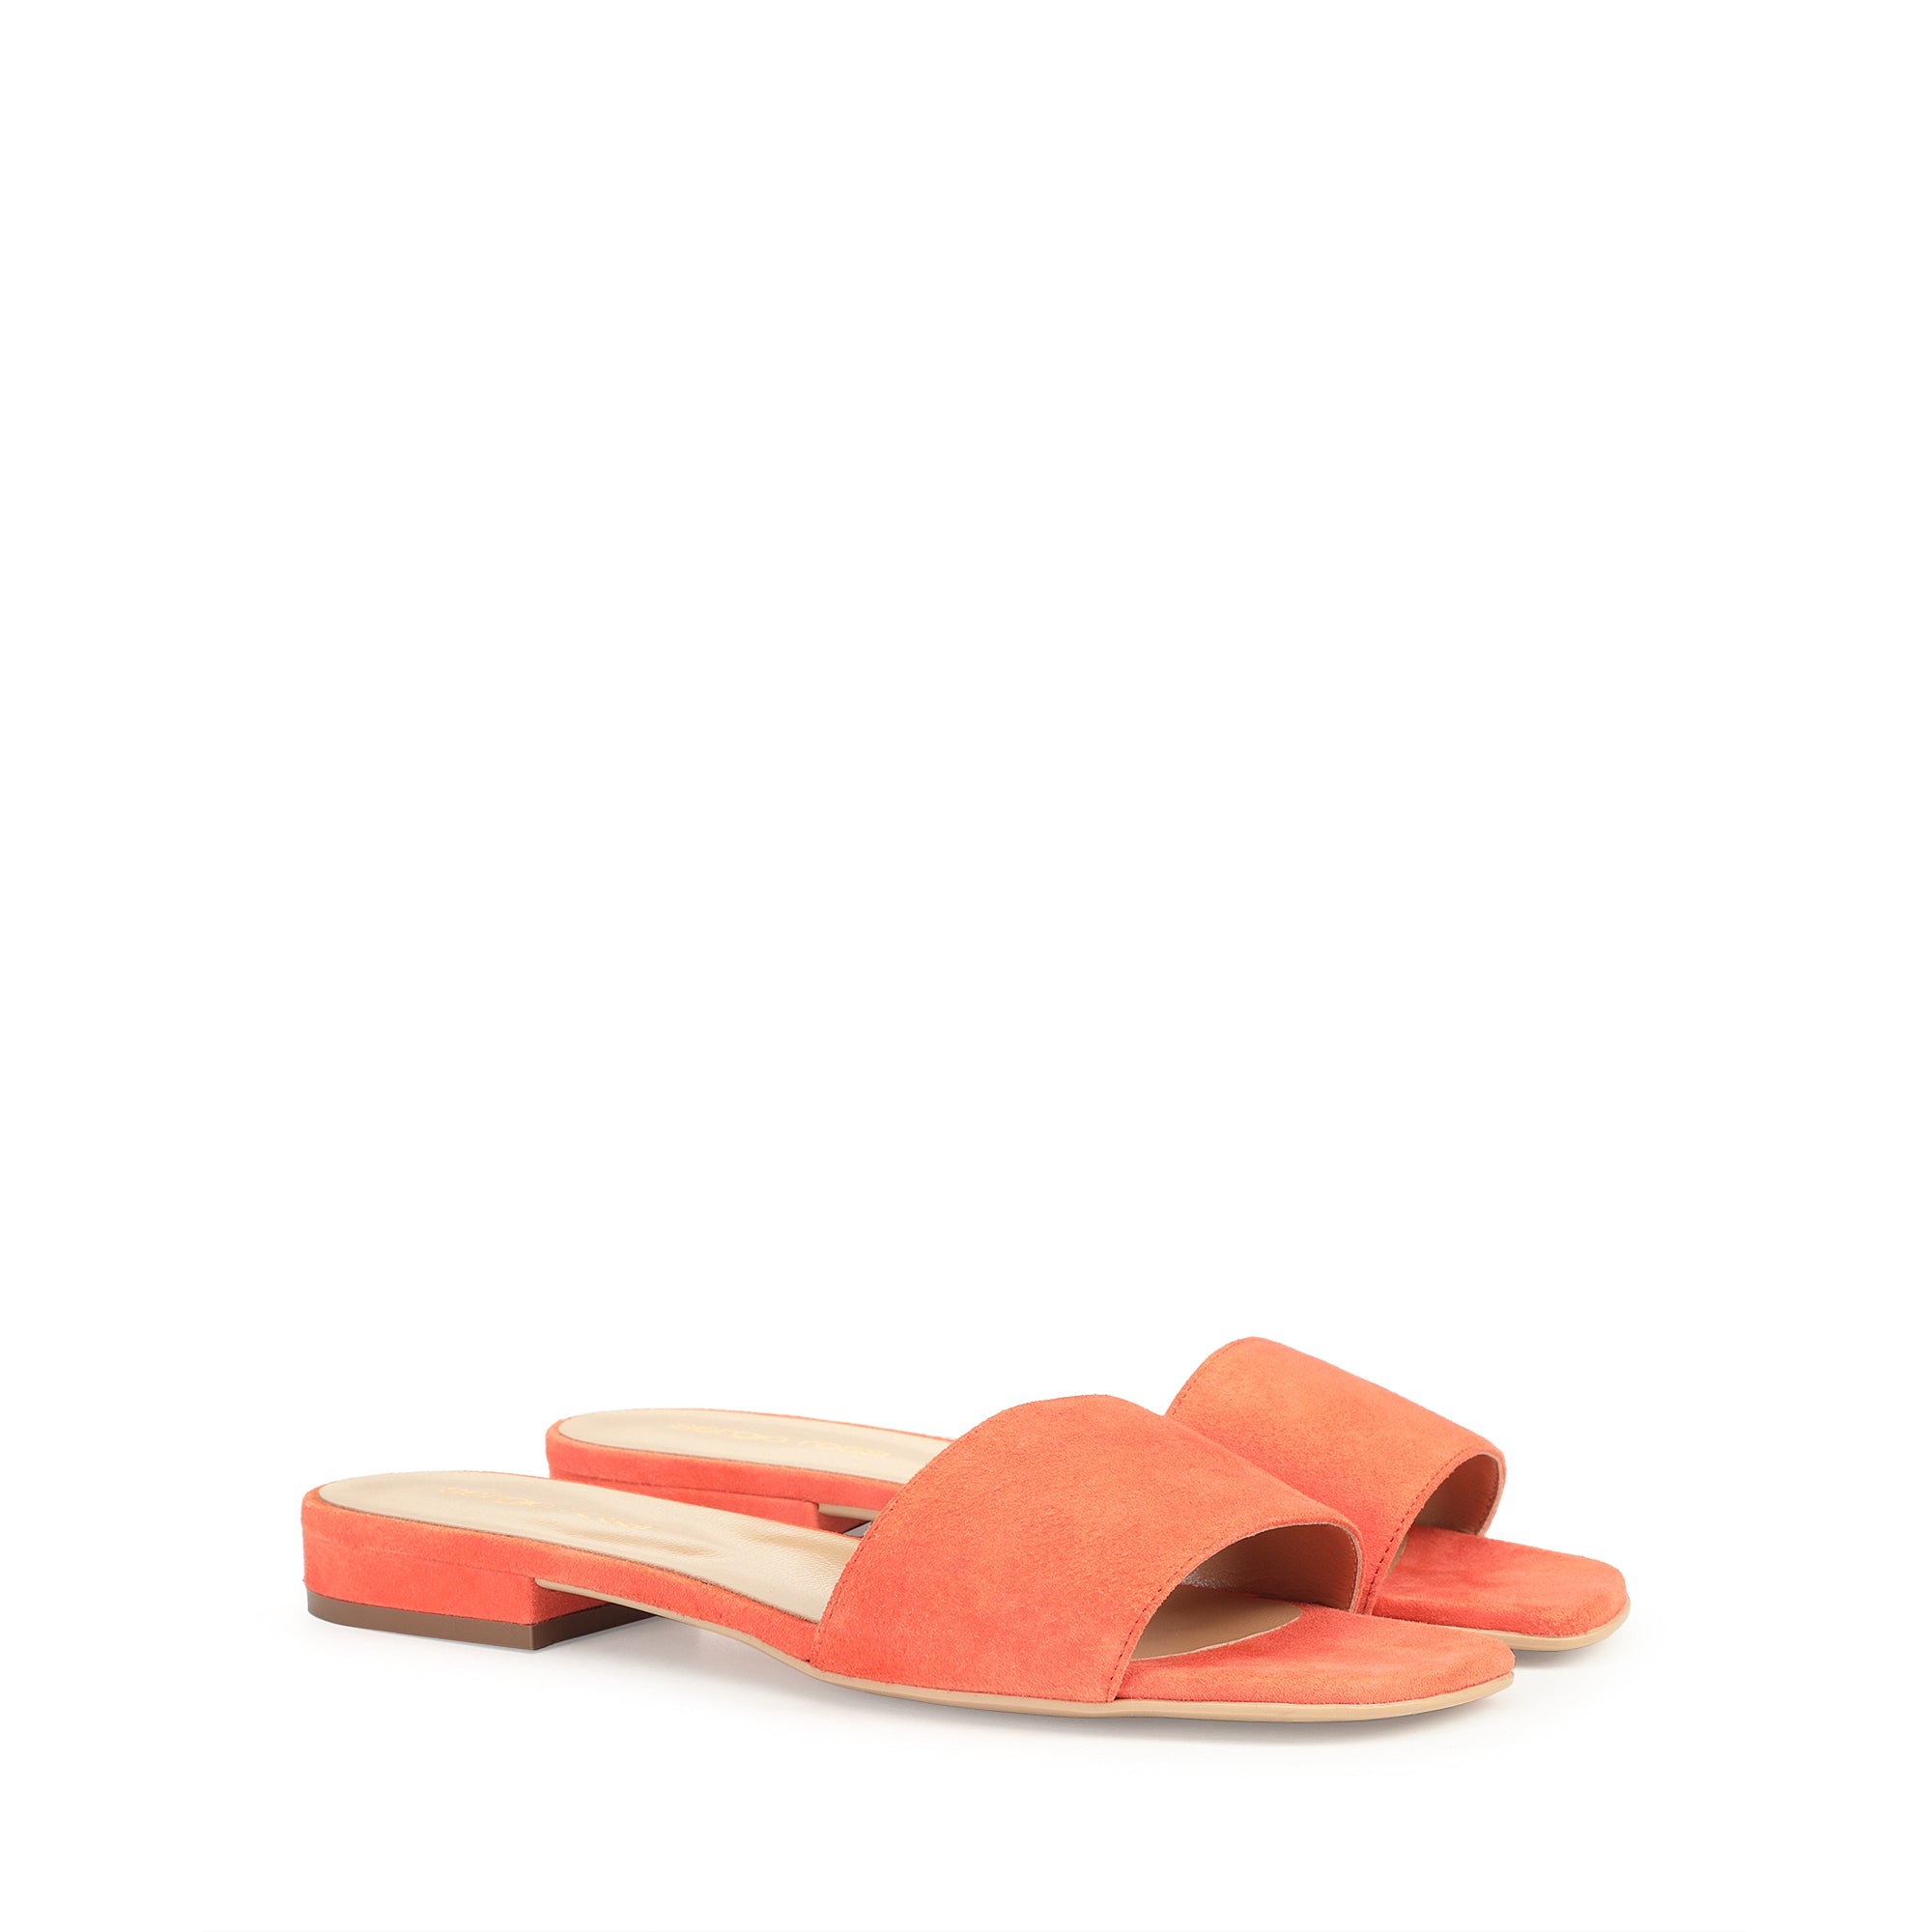 Gruppo B flat sandals - Arancio